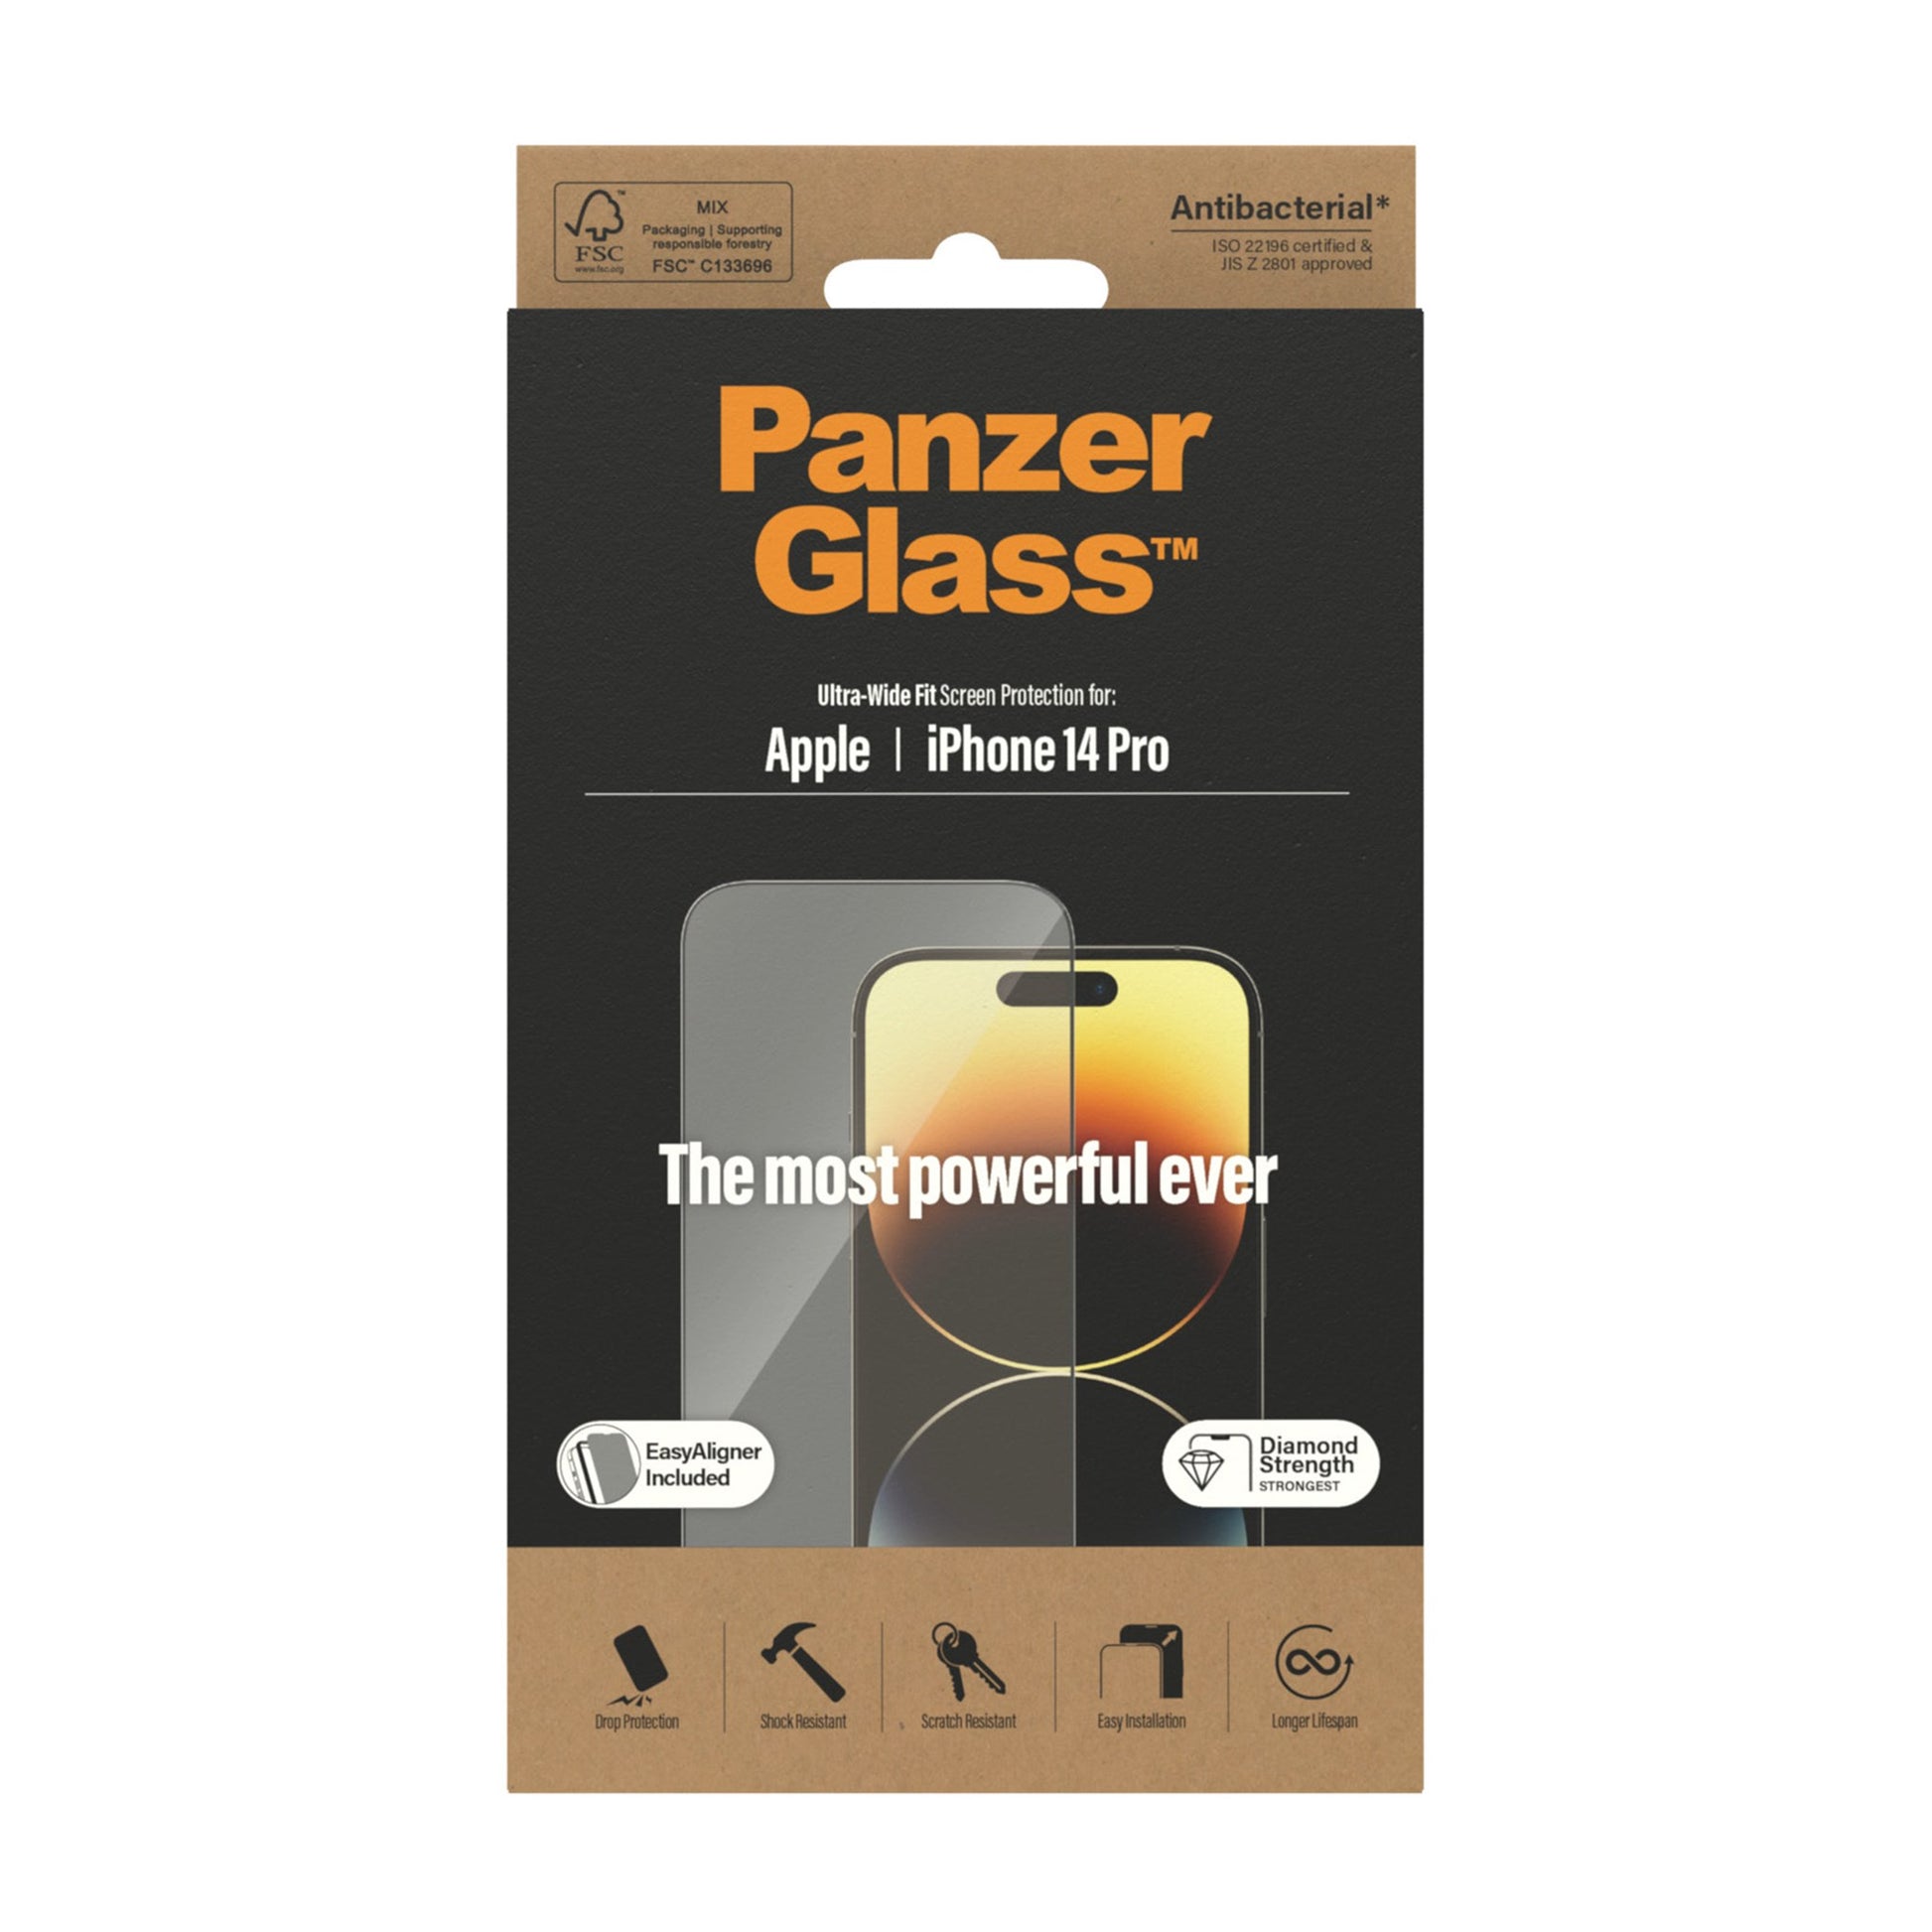 Panzerglass Protection d'écran Ultra Wide Fit Privacy iPhon